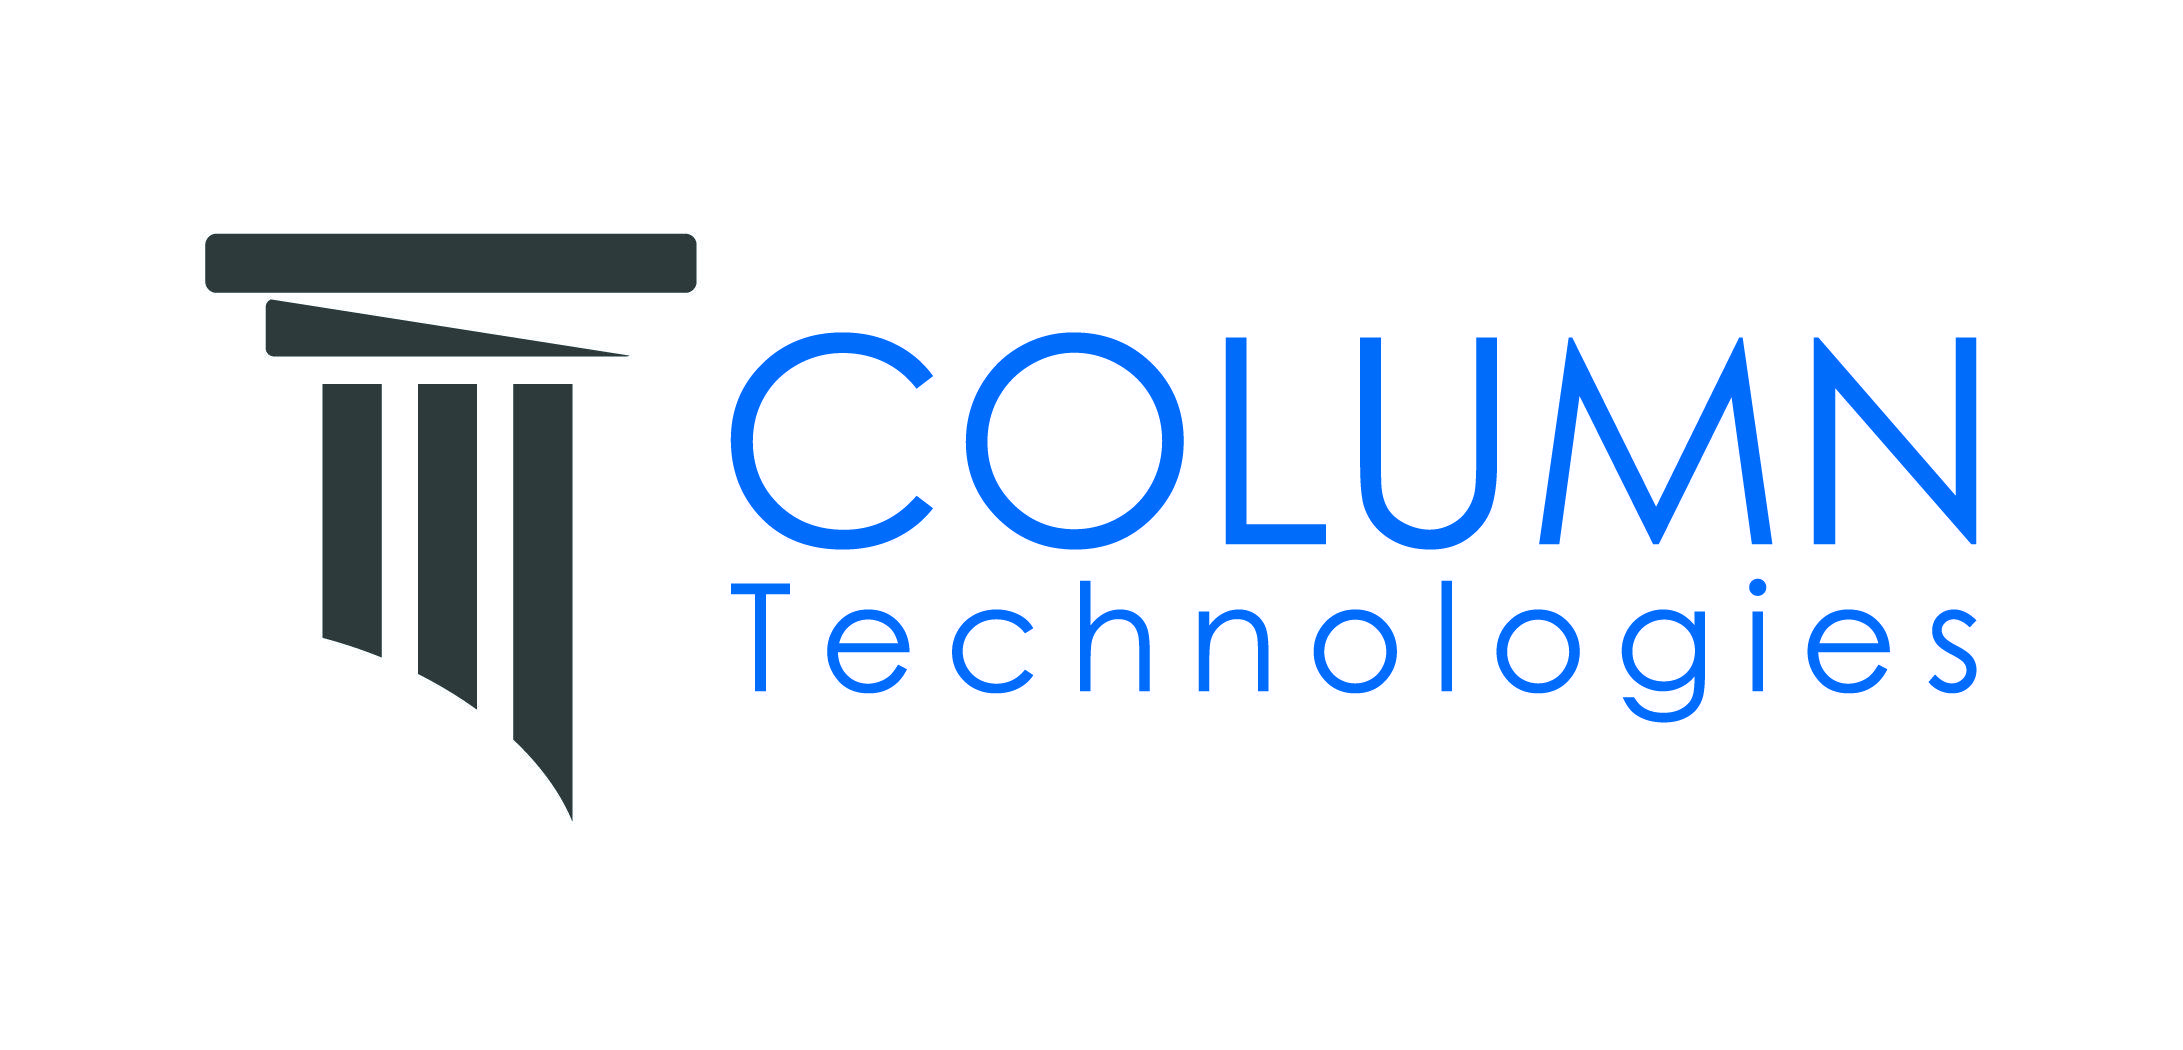 Column Logo - Column Technologies Logo Without Tagline